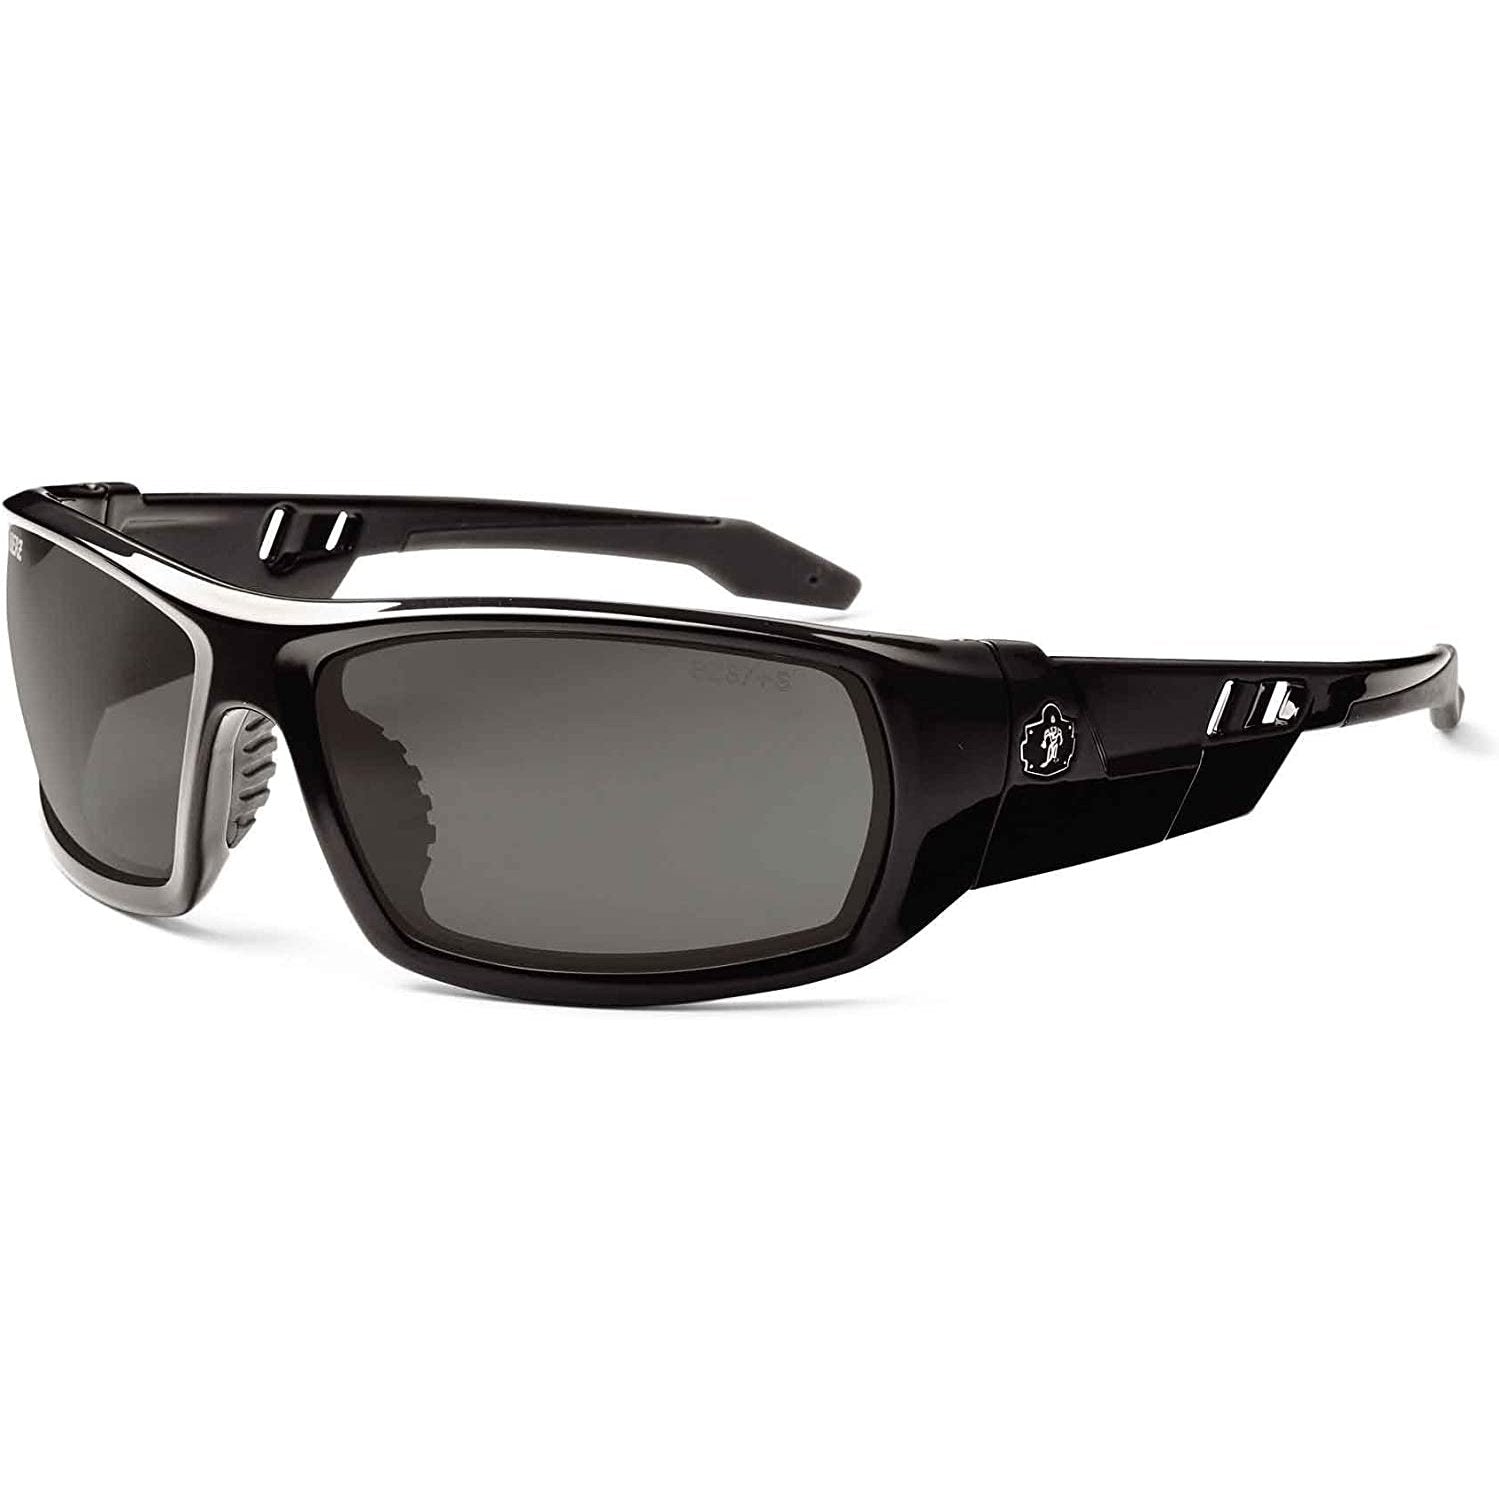 Skullerz Odin Polarized Safety Sunglasses - Black Frame, Copper Lens